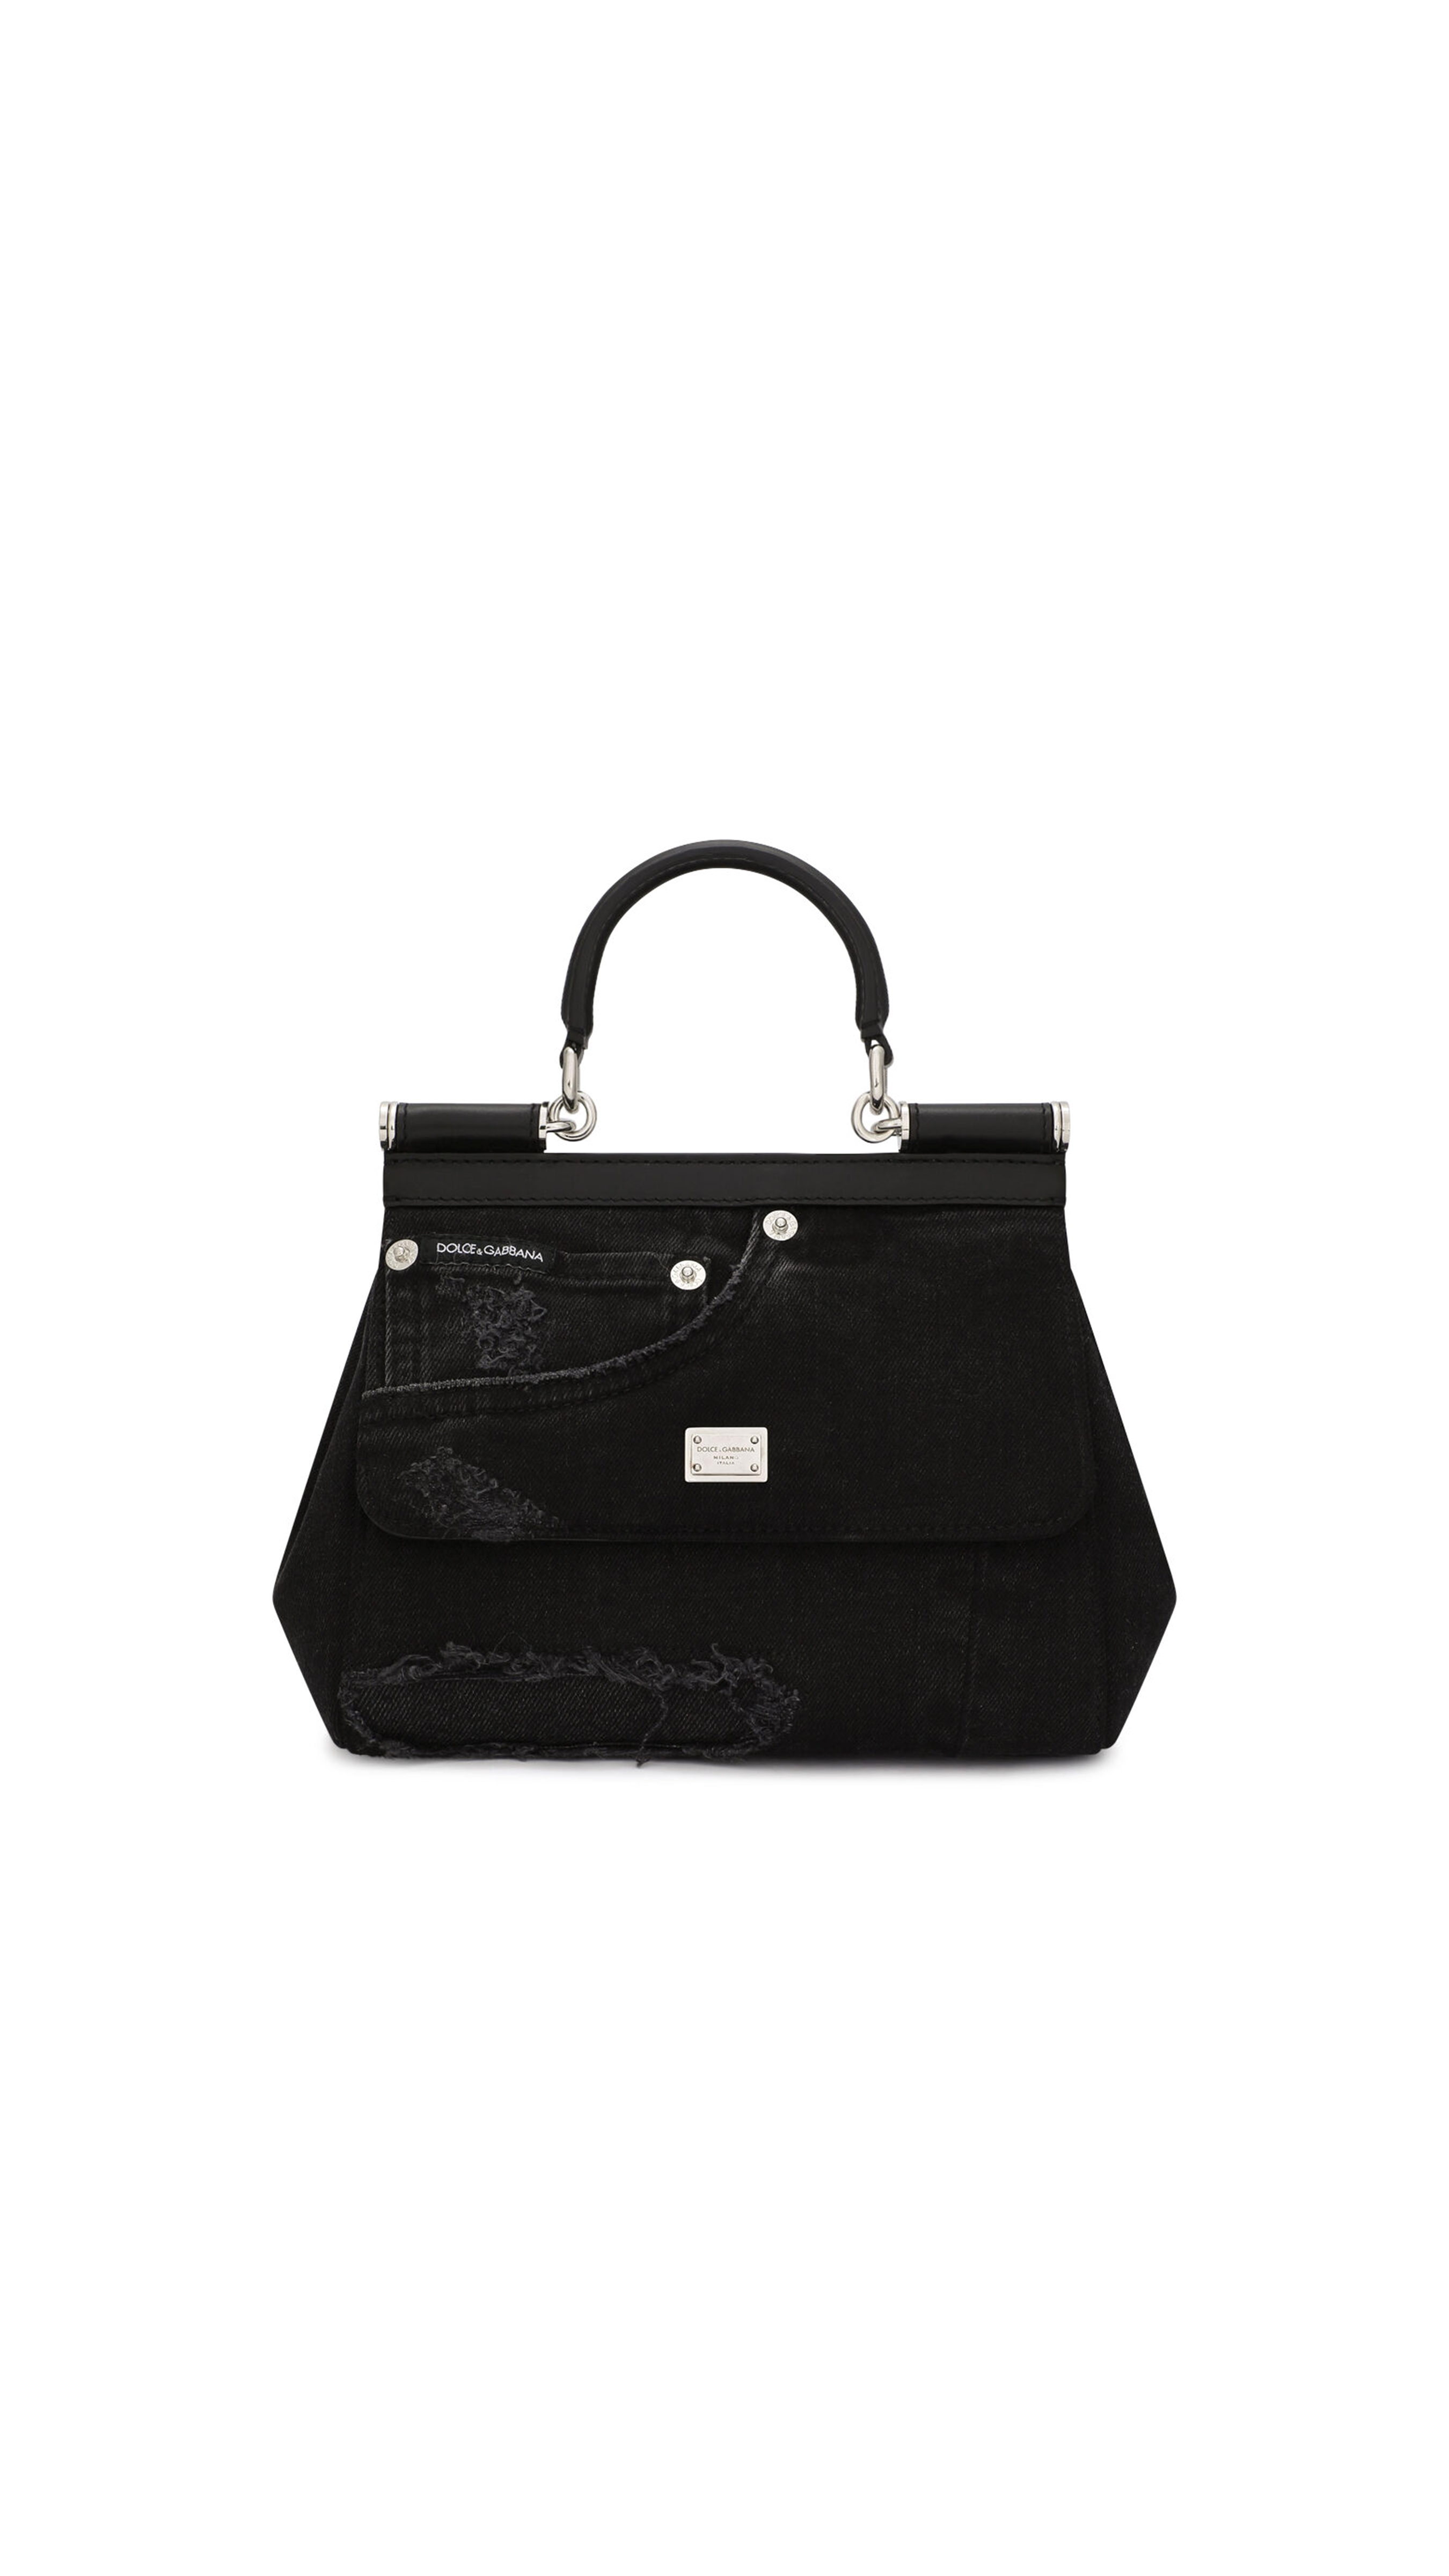 Dolce Gabbana Original Sicily Bag with Top Handle Black Leather